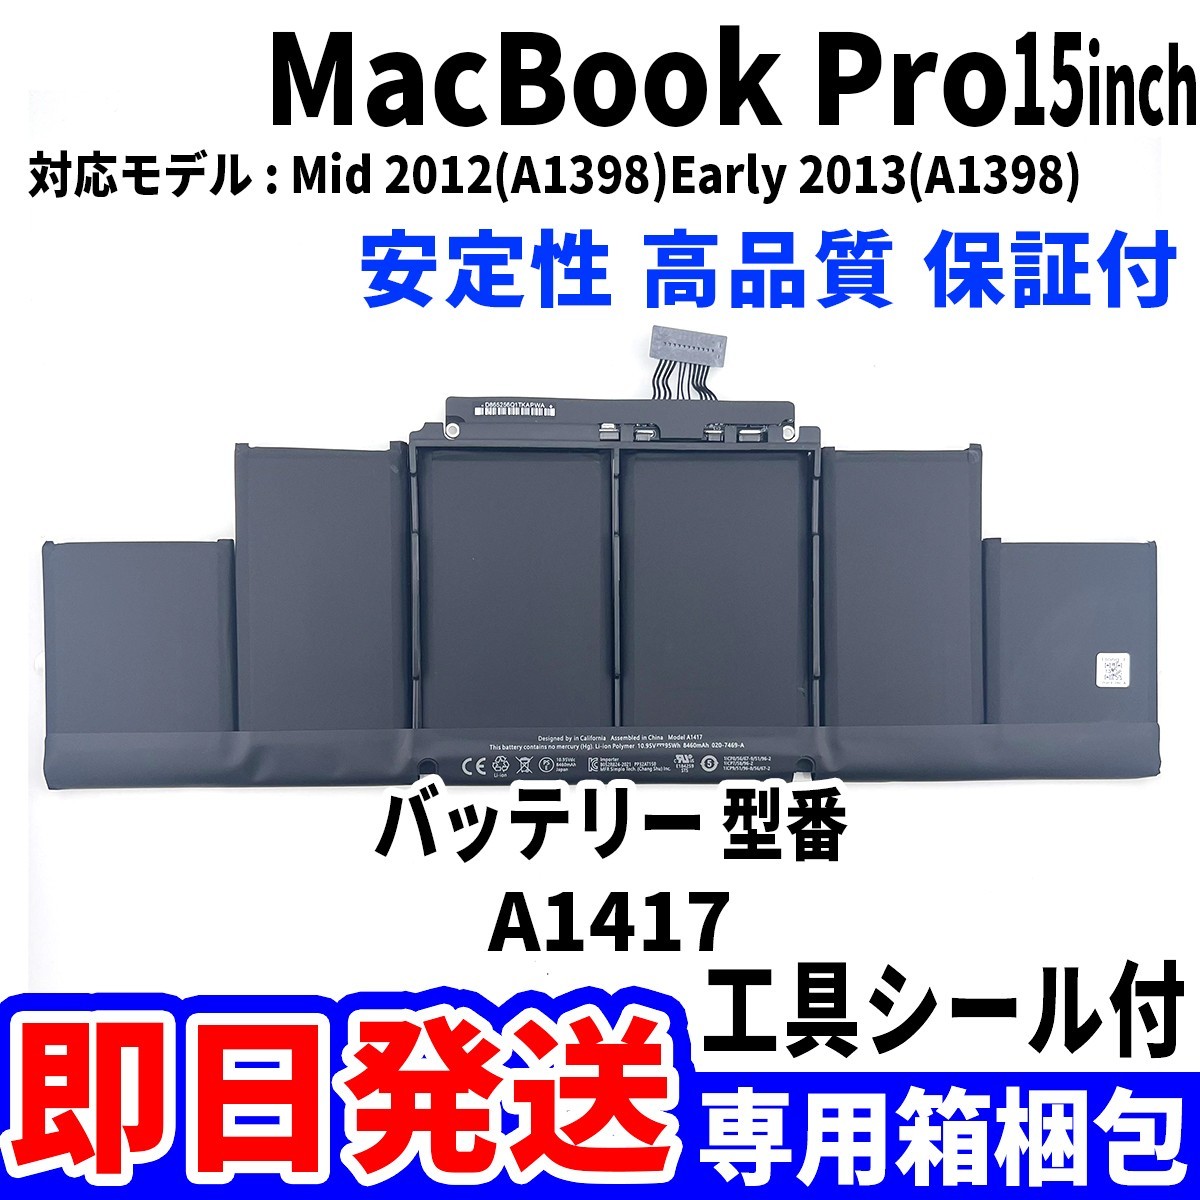 新品 MacBook Pro 15 inch A1398 バッテリー A1417 2012 2013 battery repair 本体用 交換 修理 工具付_画像1